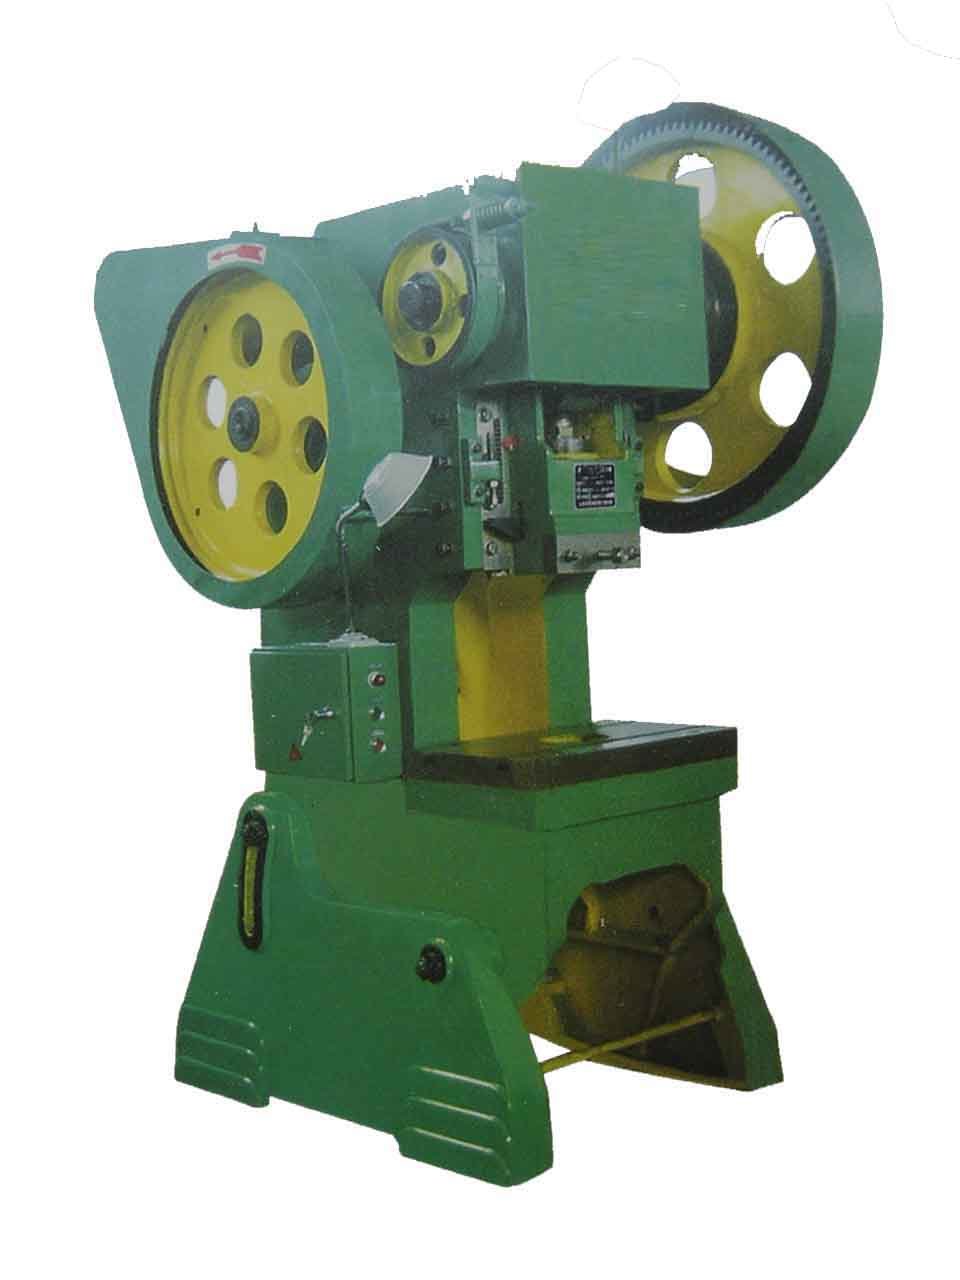 J23 Series Open Tilting Type Press Machine, J23-20ton Mechanical Power Press, 20 Ton Capacity Power Press